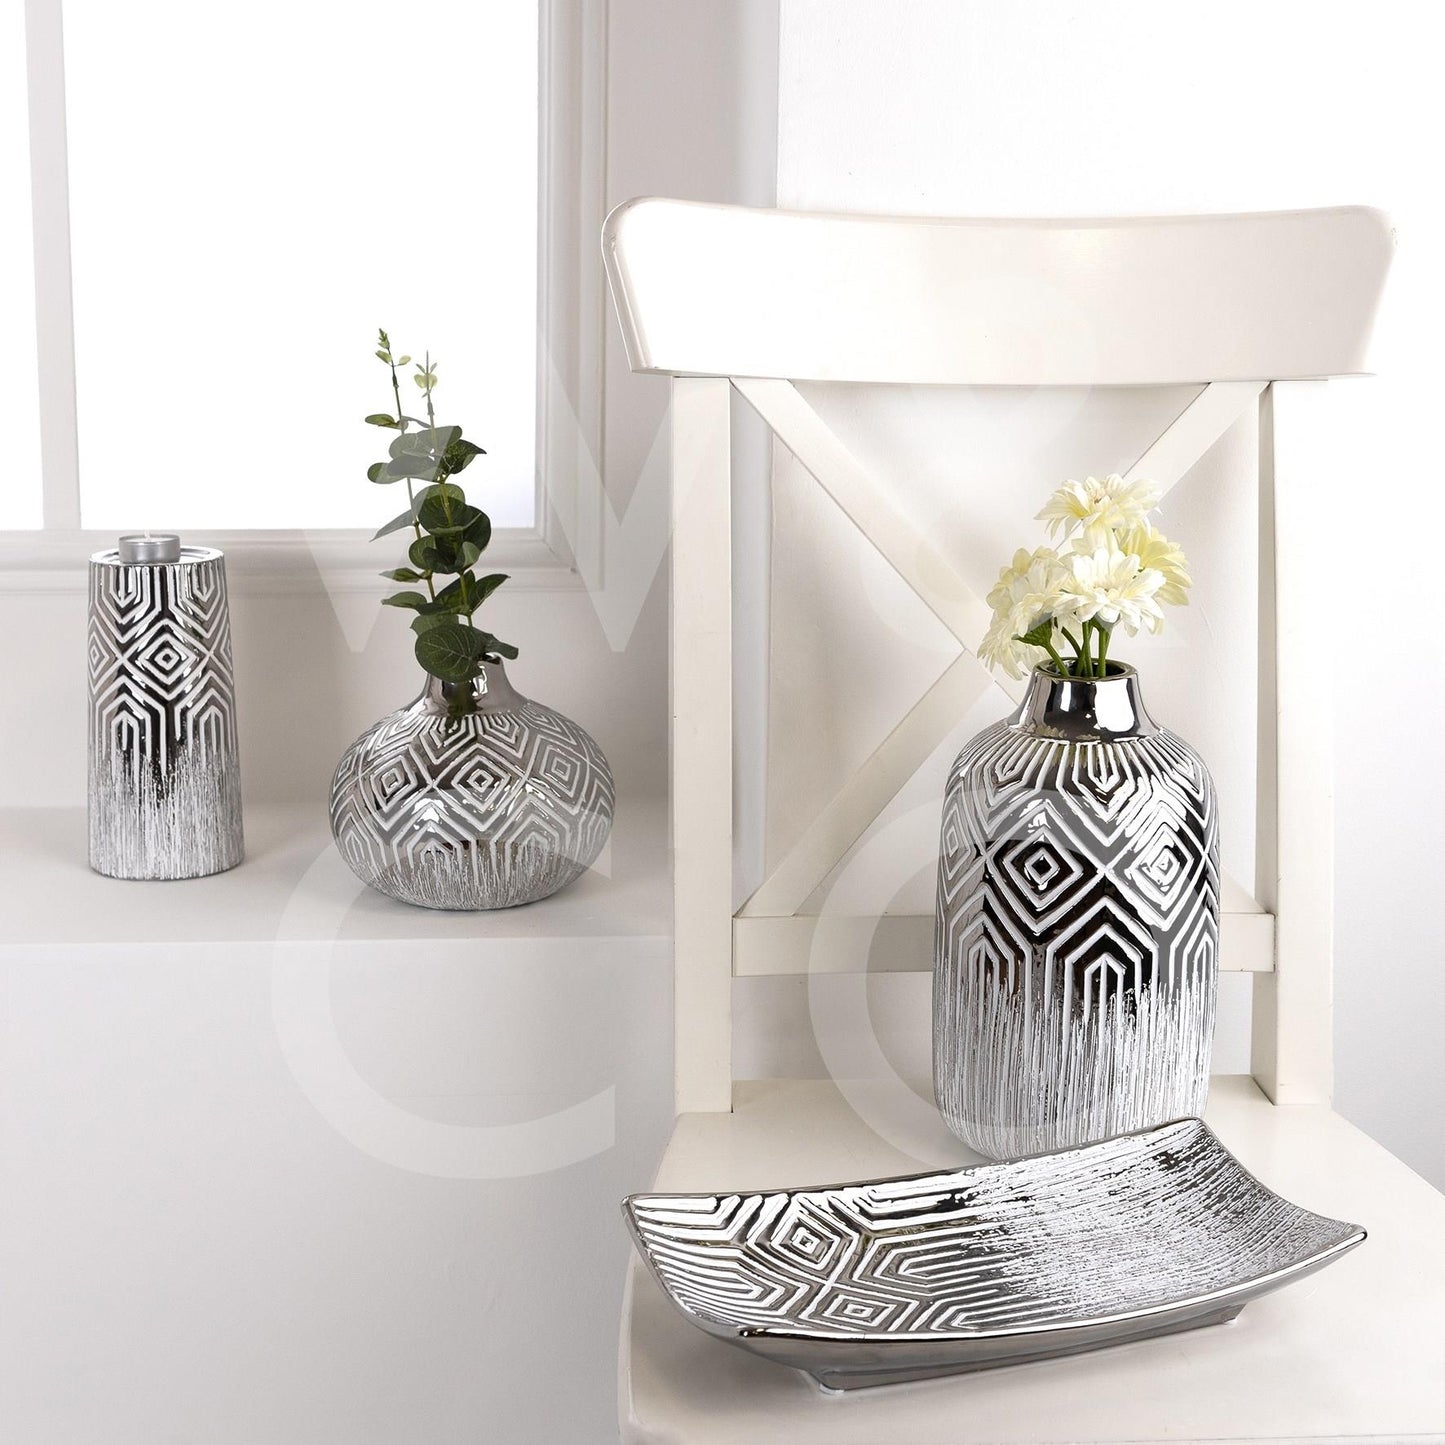 Silver & White Geometric Vase Large